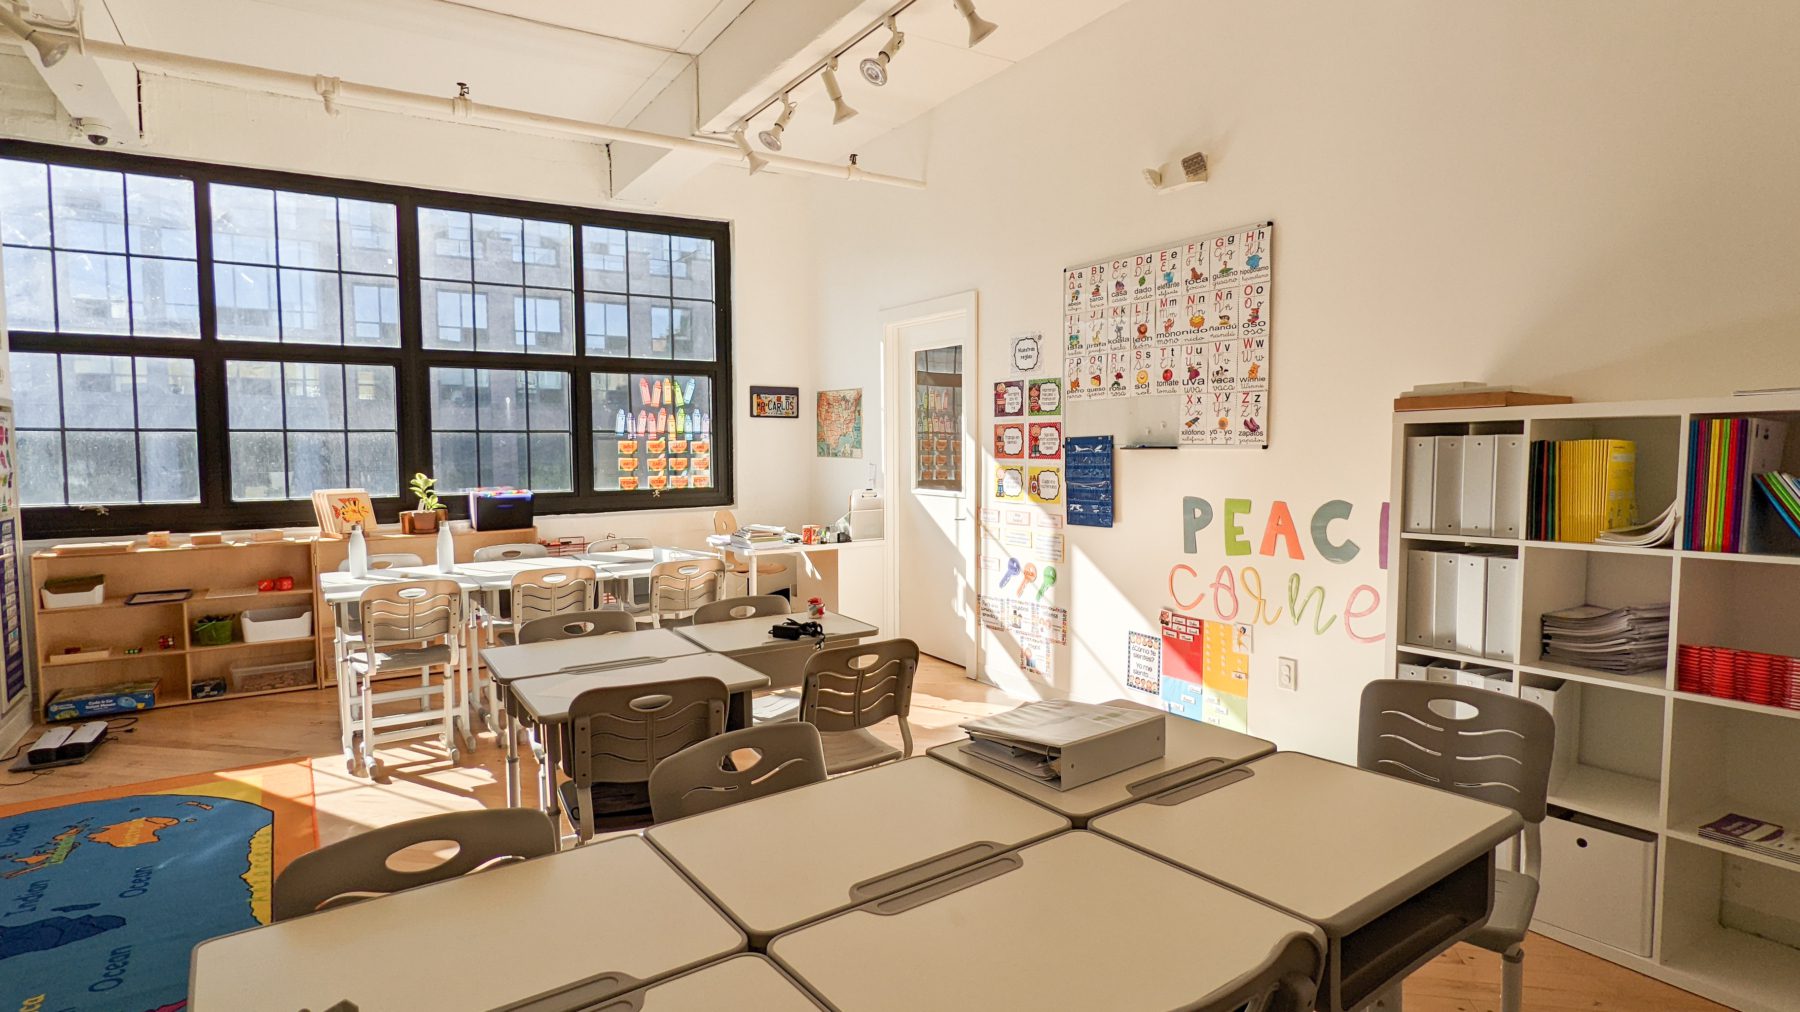 A bright and warm classroom at Tessa International School